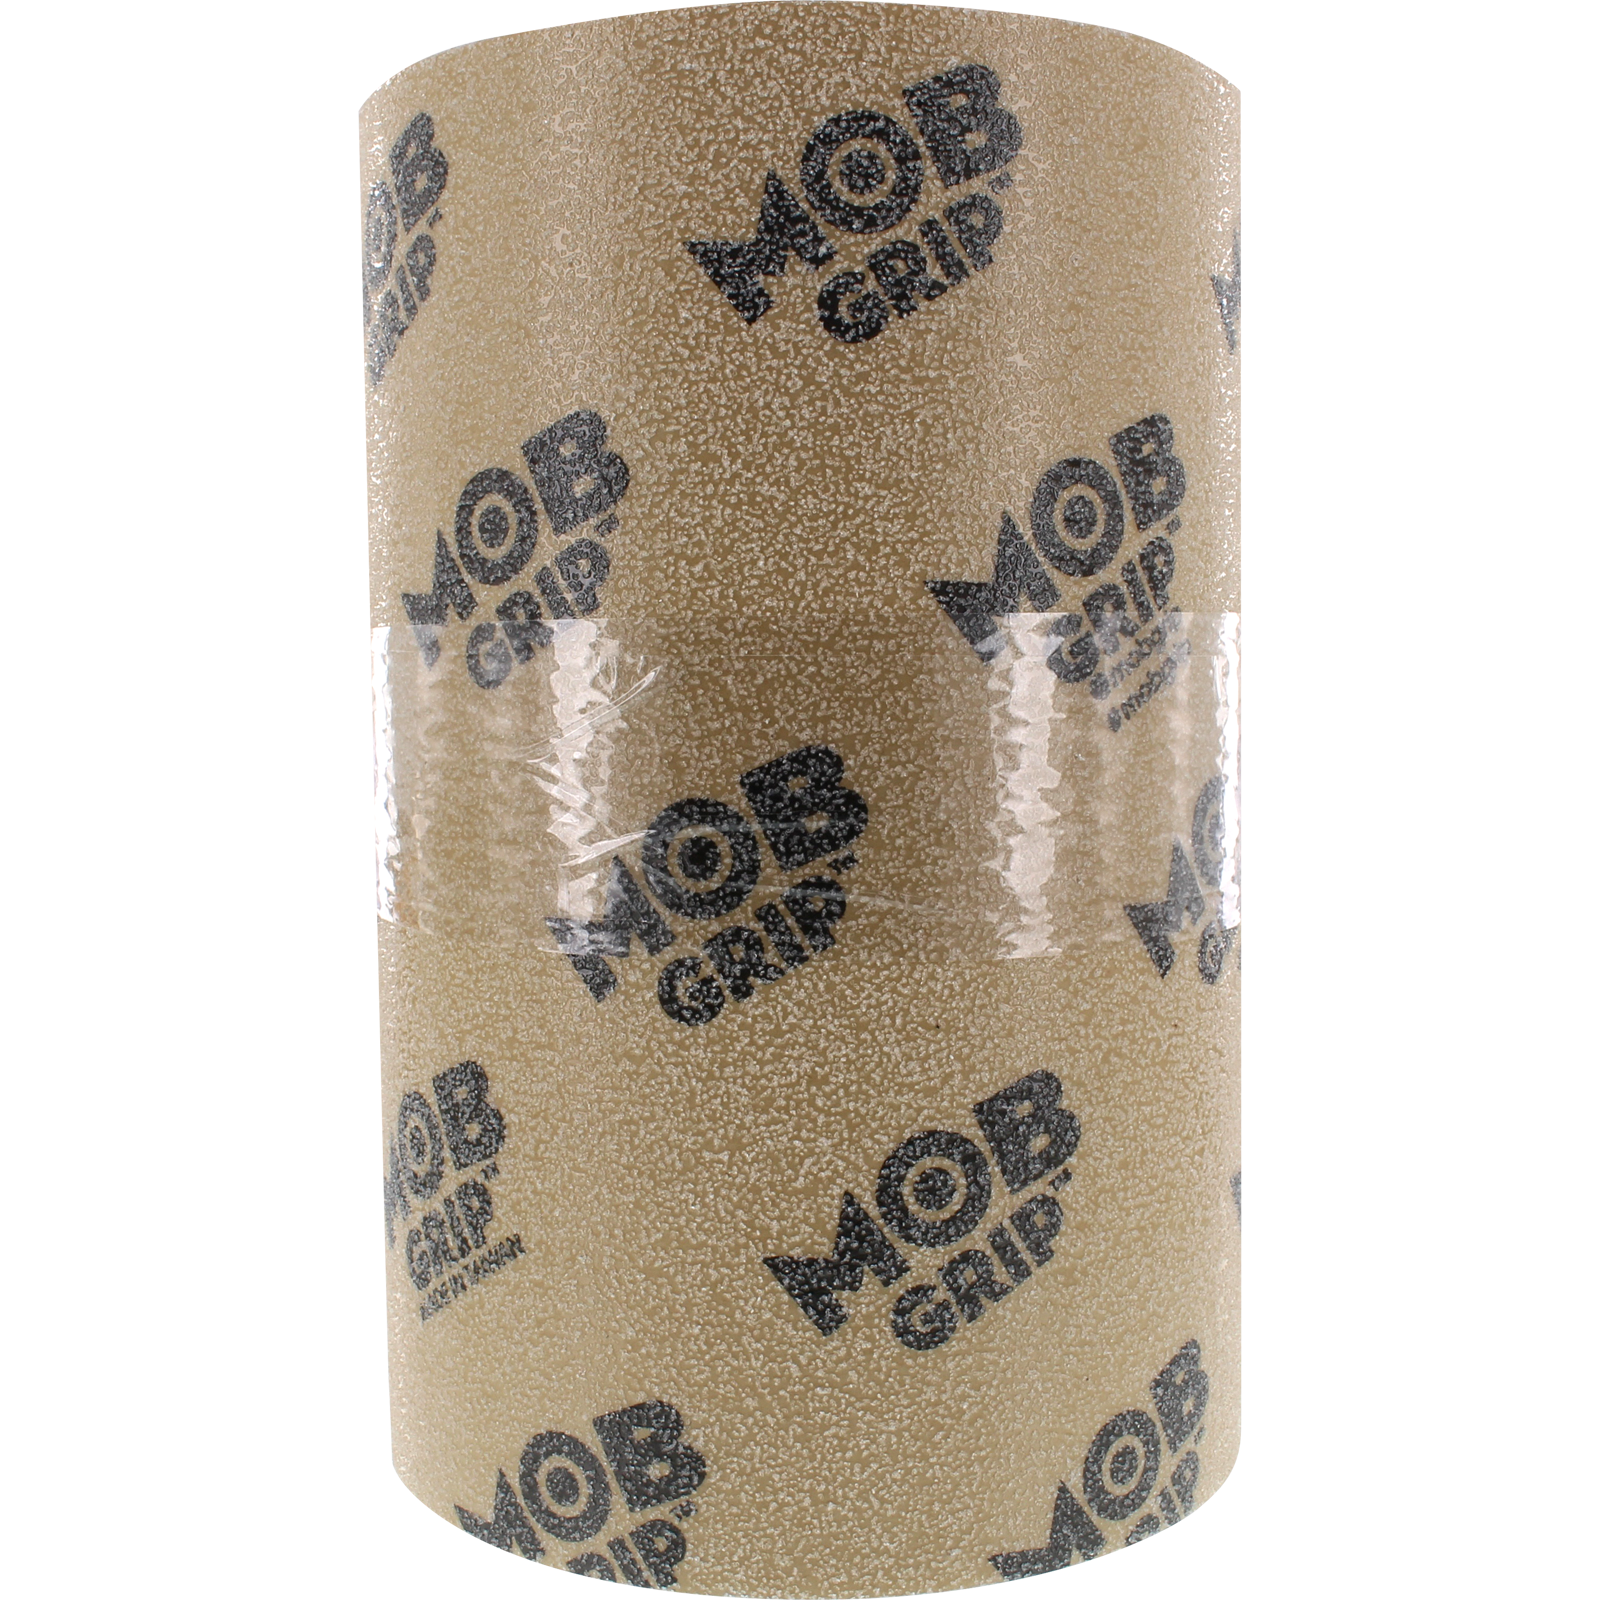 Clear Mob Grip Tape